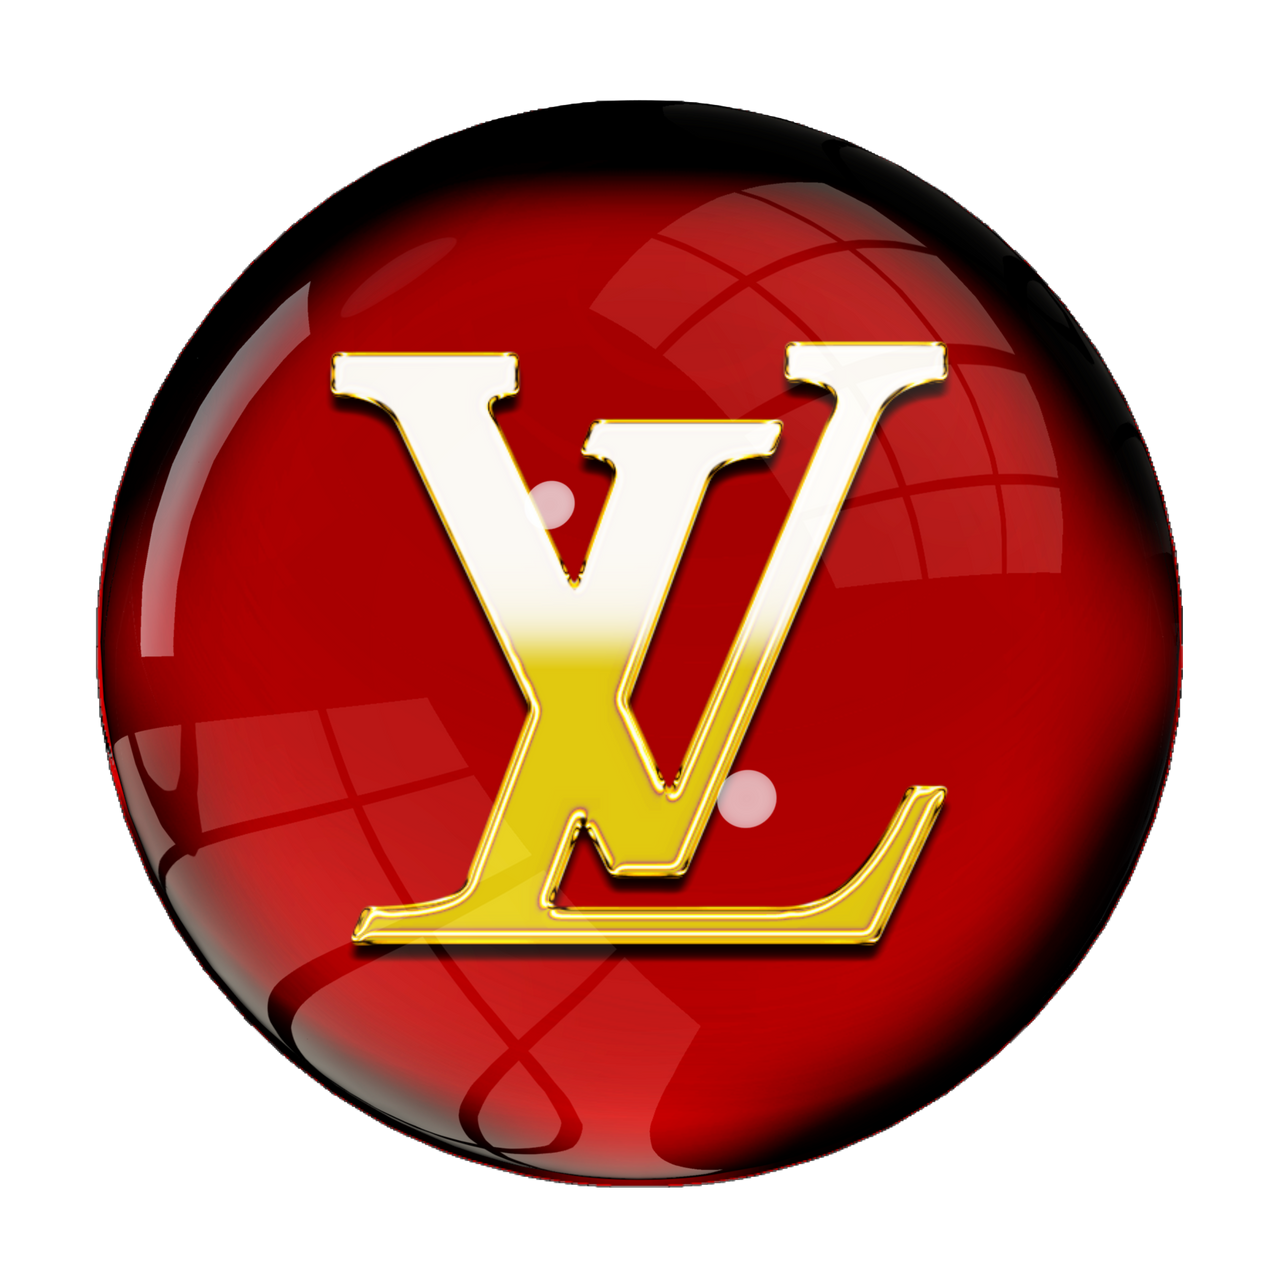 LV Logo Design by TeVesMuyNerviosa on DeviantArt